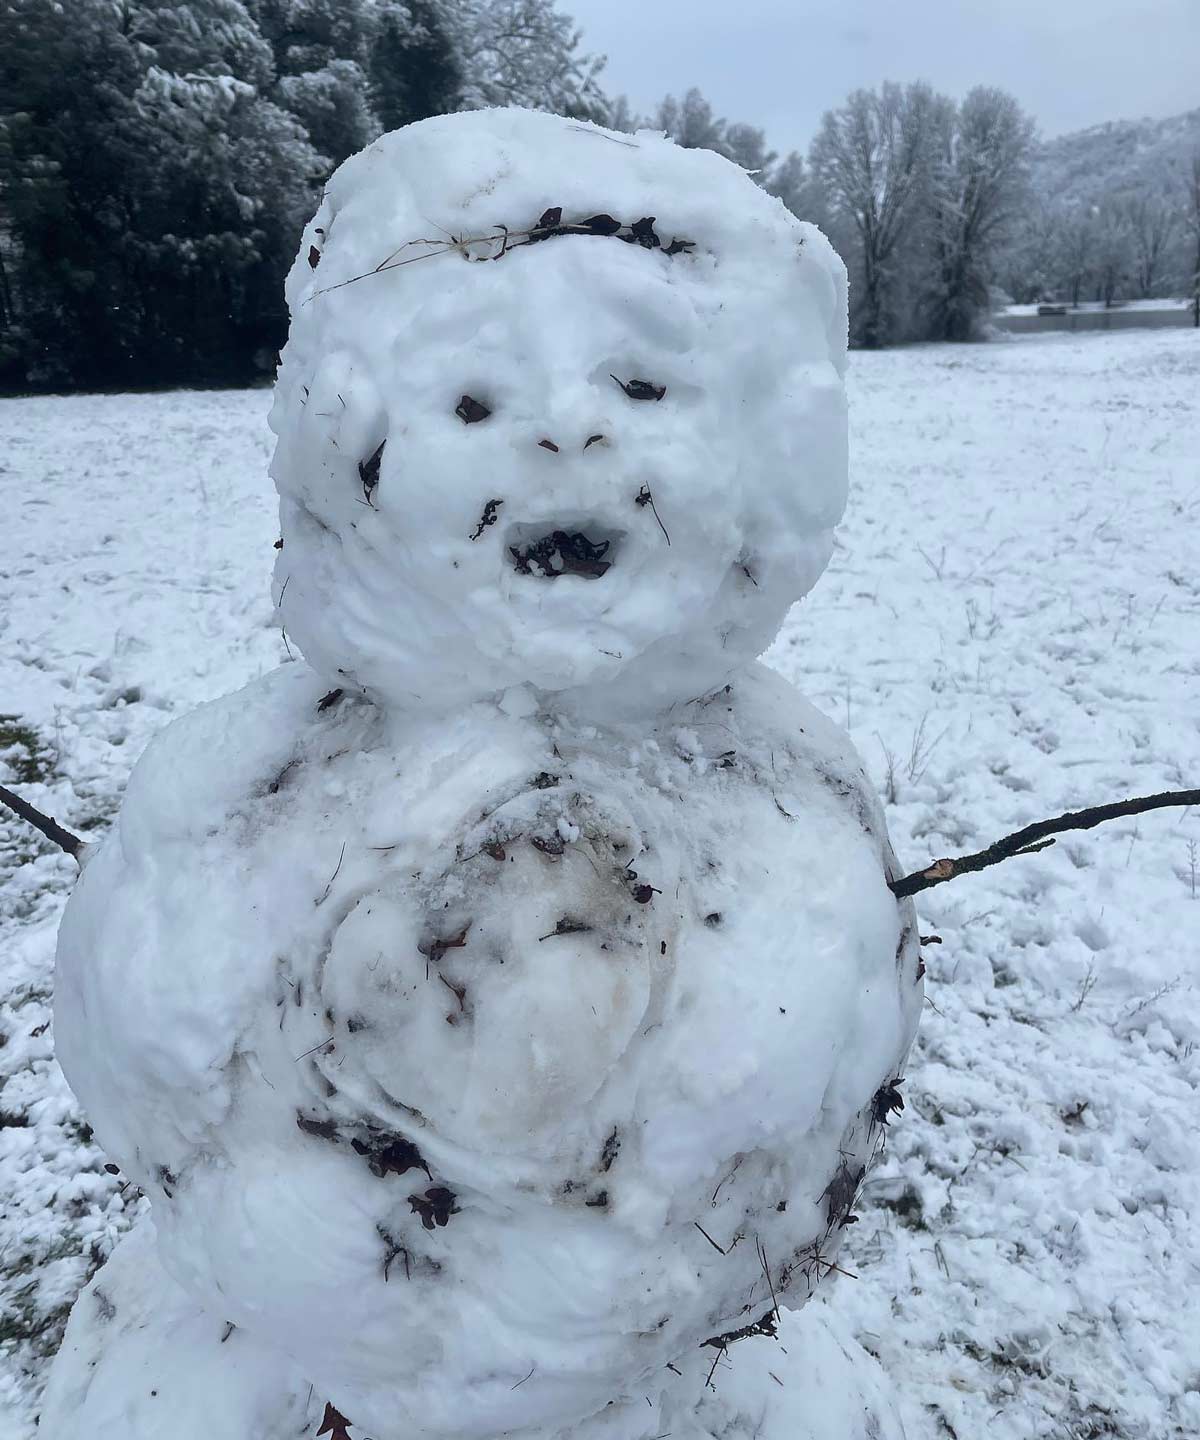 Rare snowfall in California. Friend set out to make a “realistic” snowman